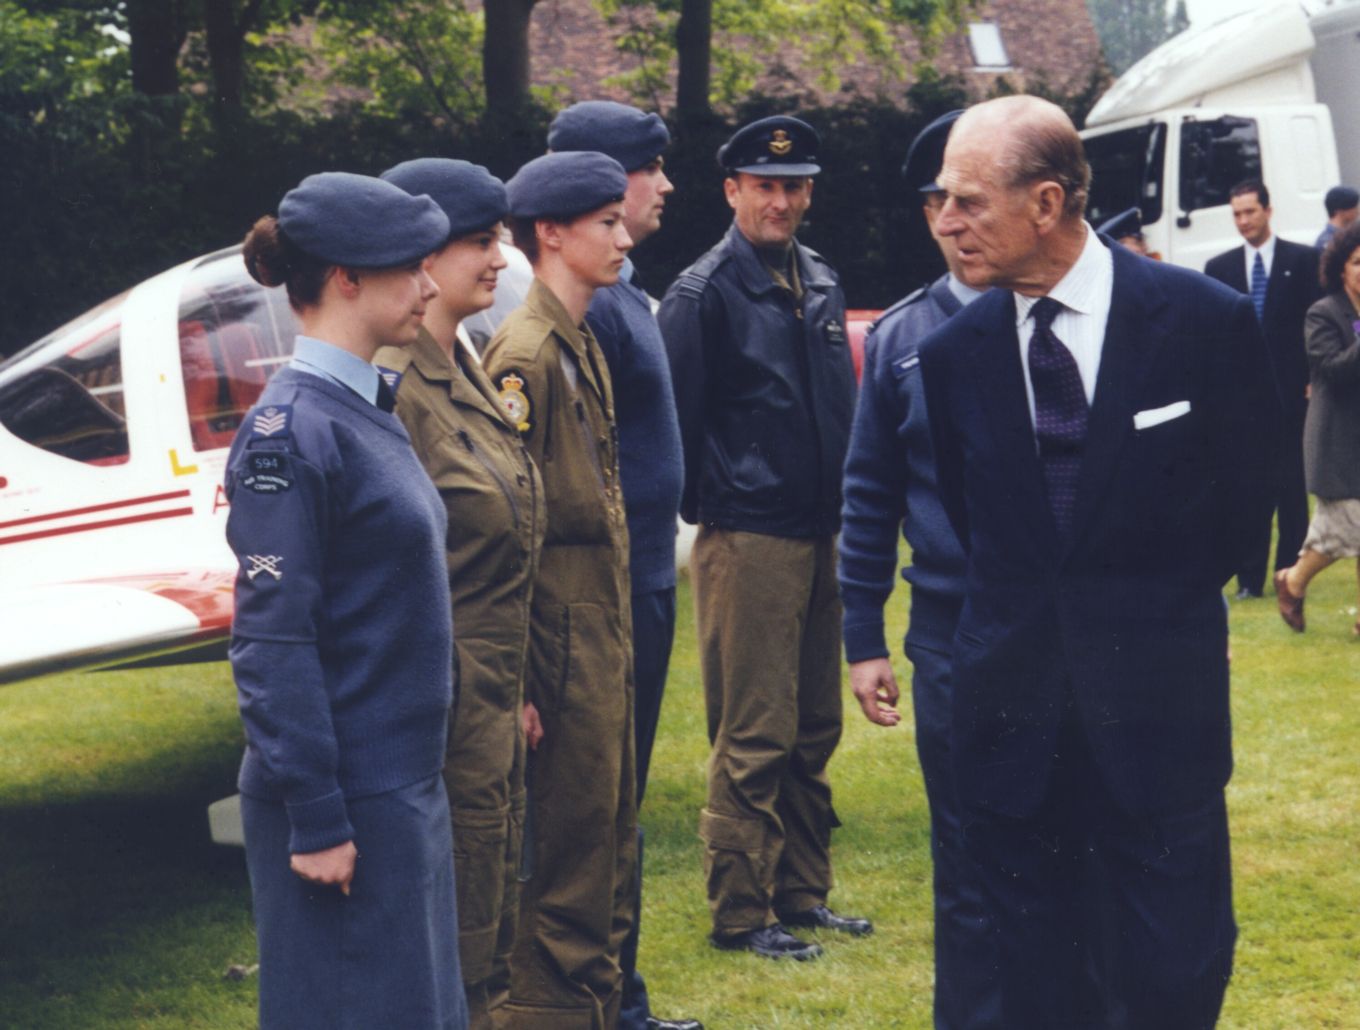 Image shows HRH The Prince Philip, Duke of Edinburgh meeting RAF Air Cadets.